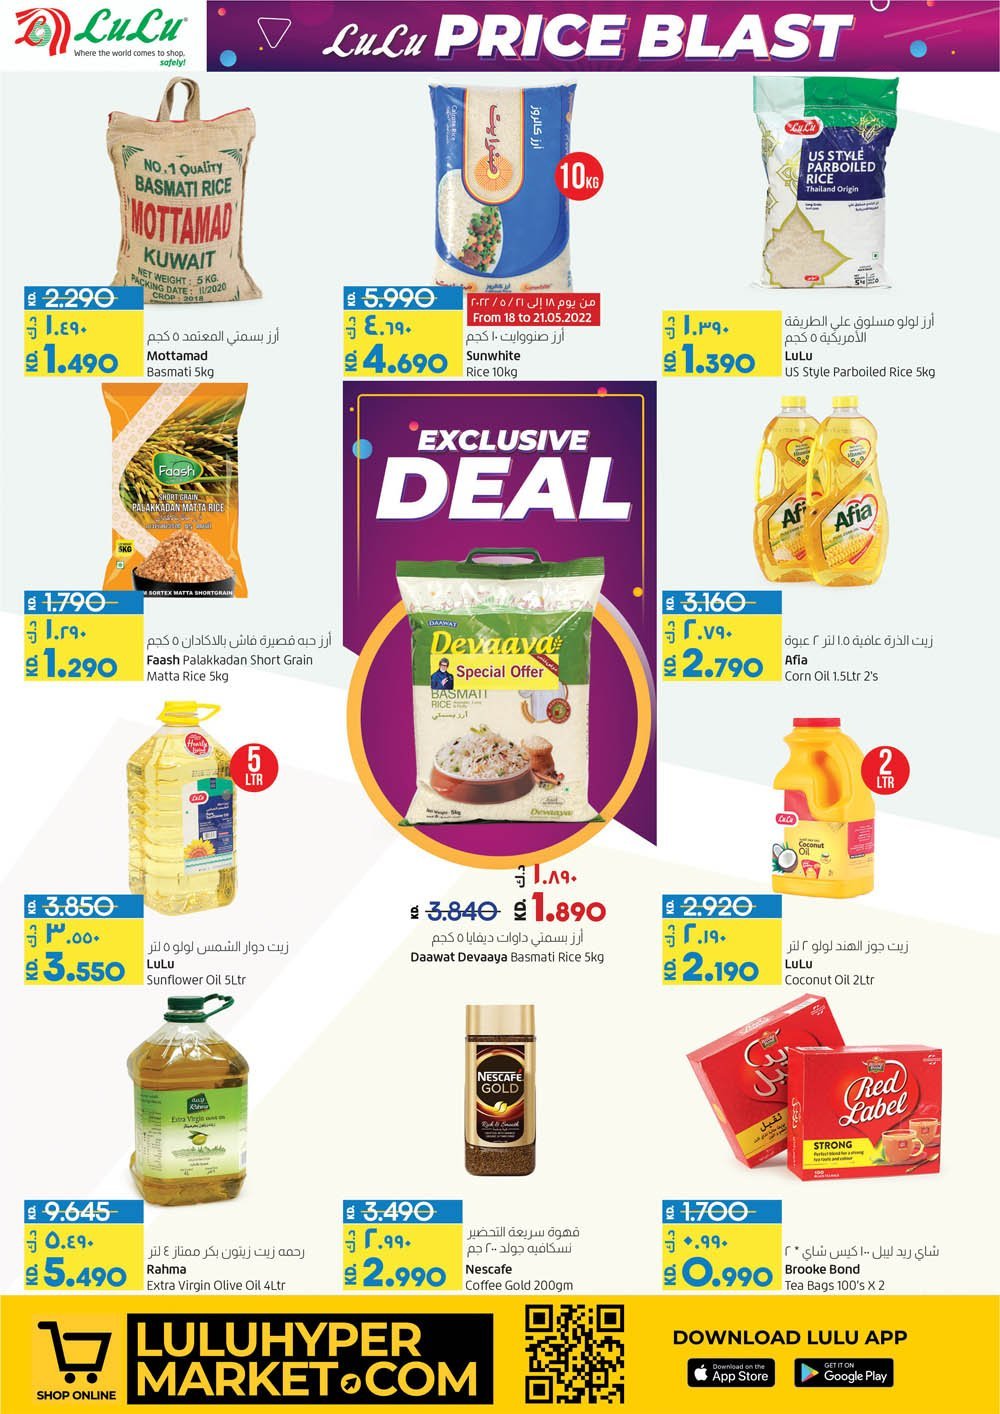 Lulu Hypermarket Price Blast starts till 24th May, iiQ8 offers 1